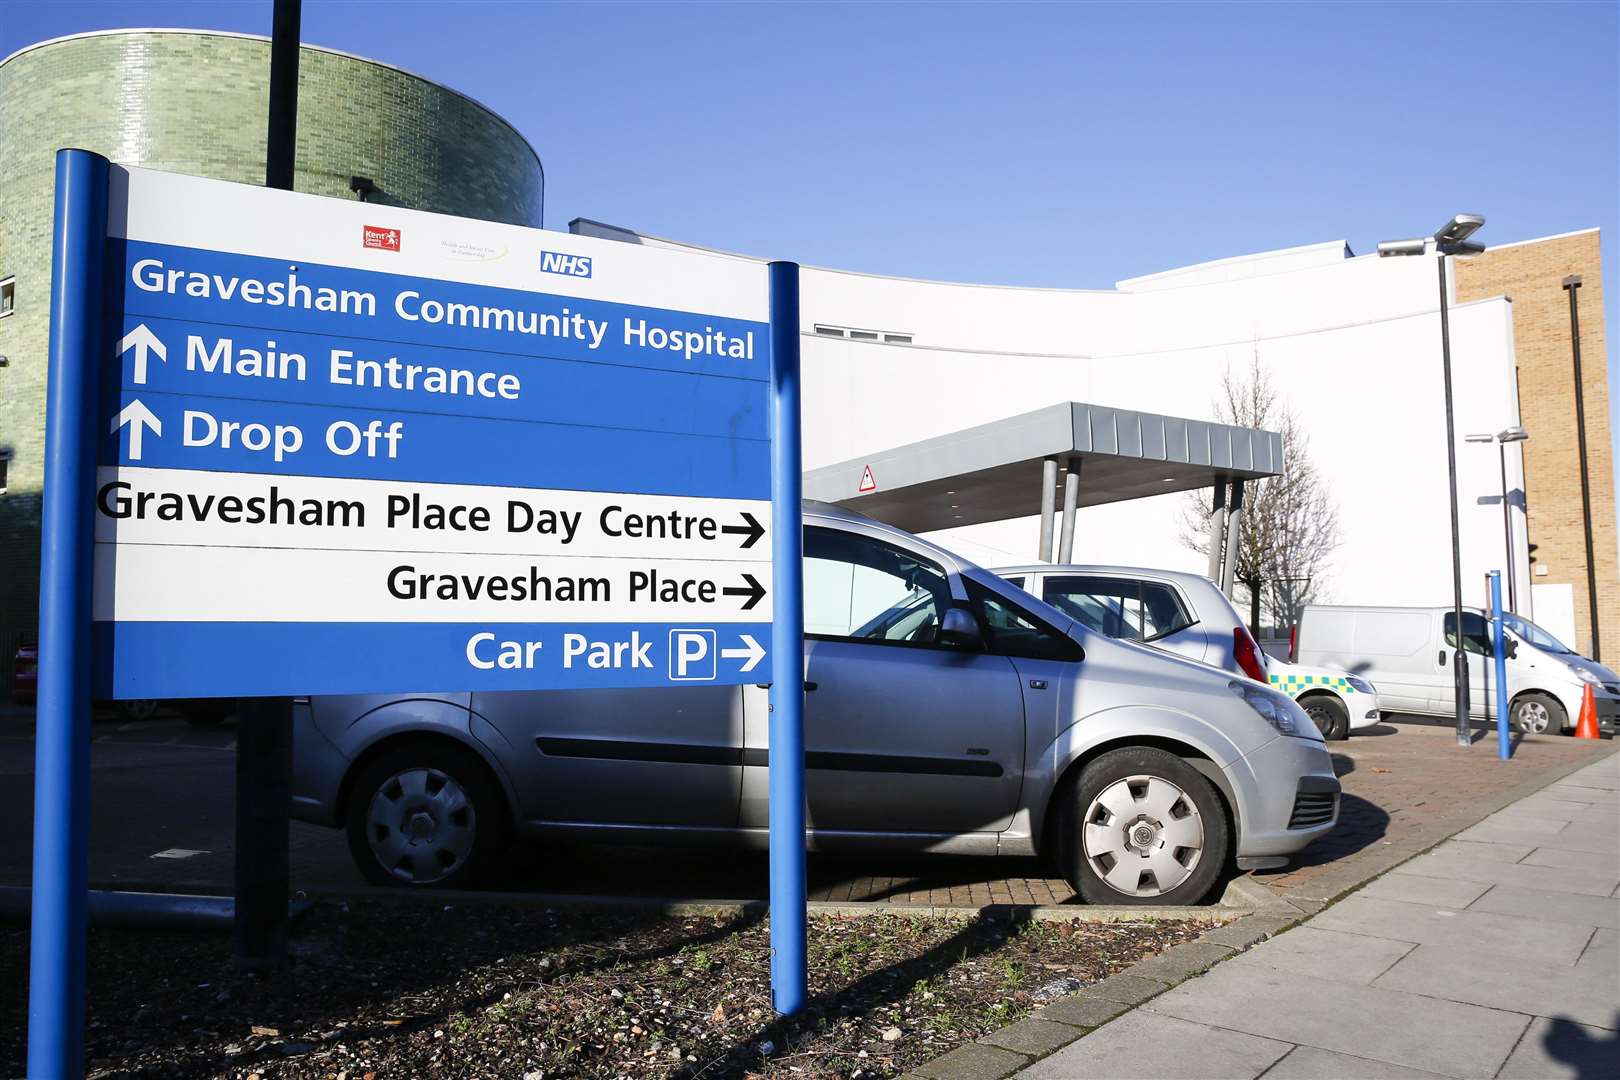 The Gravesham Community Hospital, Bath Street, Gravesend. Picture: Martin Apps